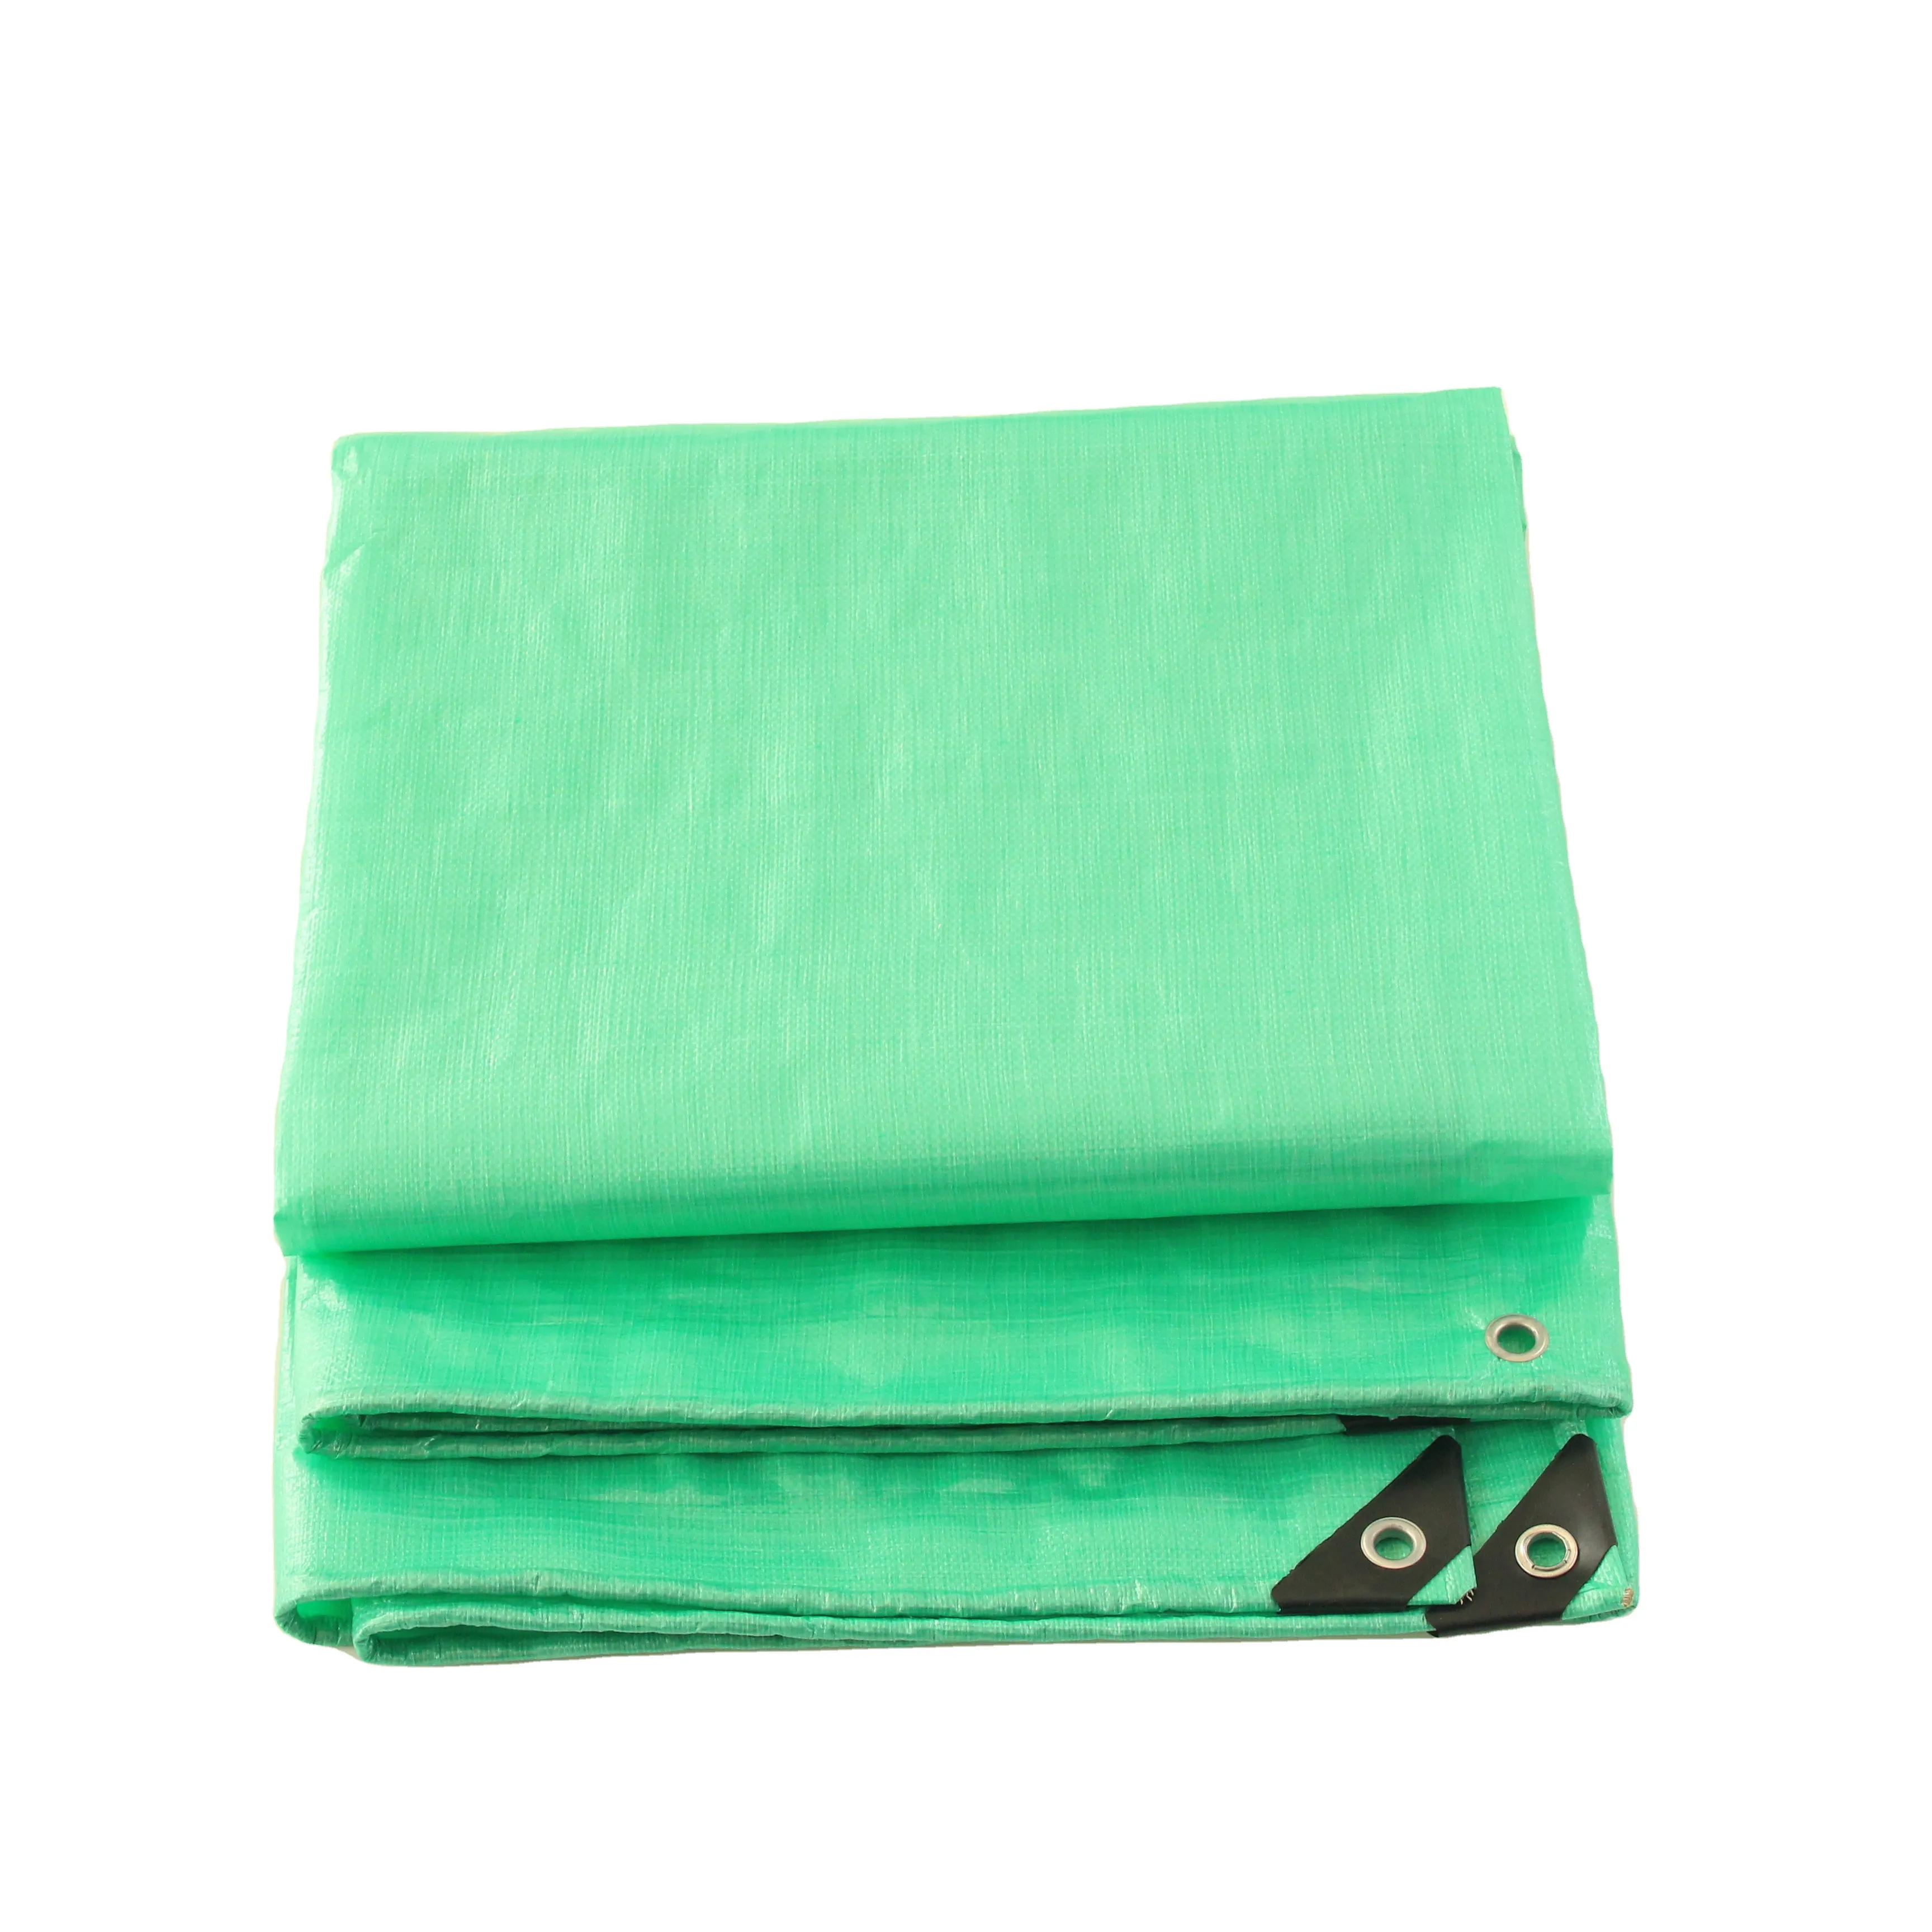 PE tarpaulin used for cotton cover or cotton module cover cotton tarps